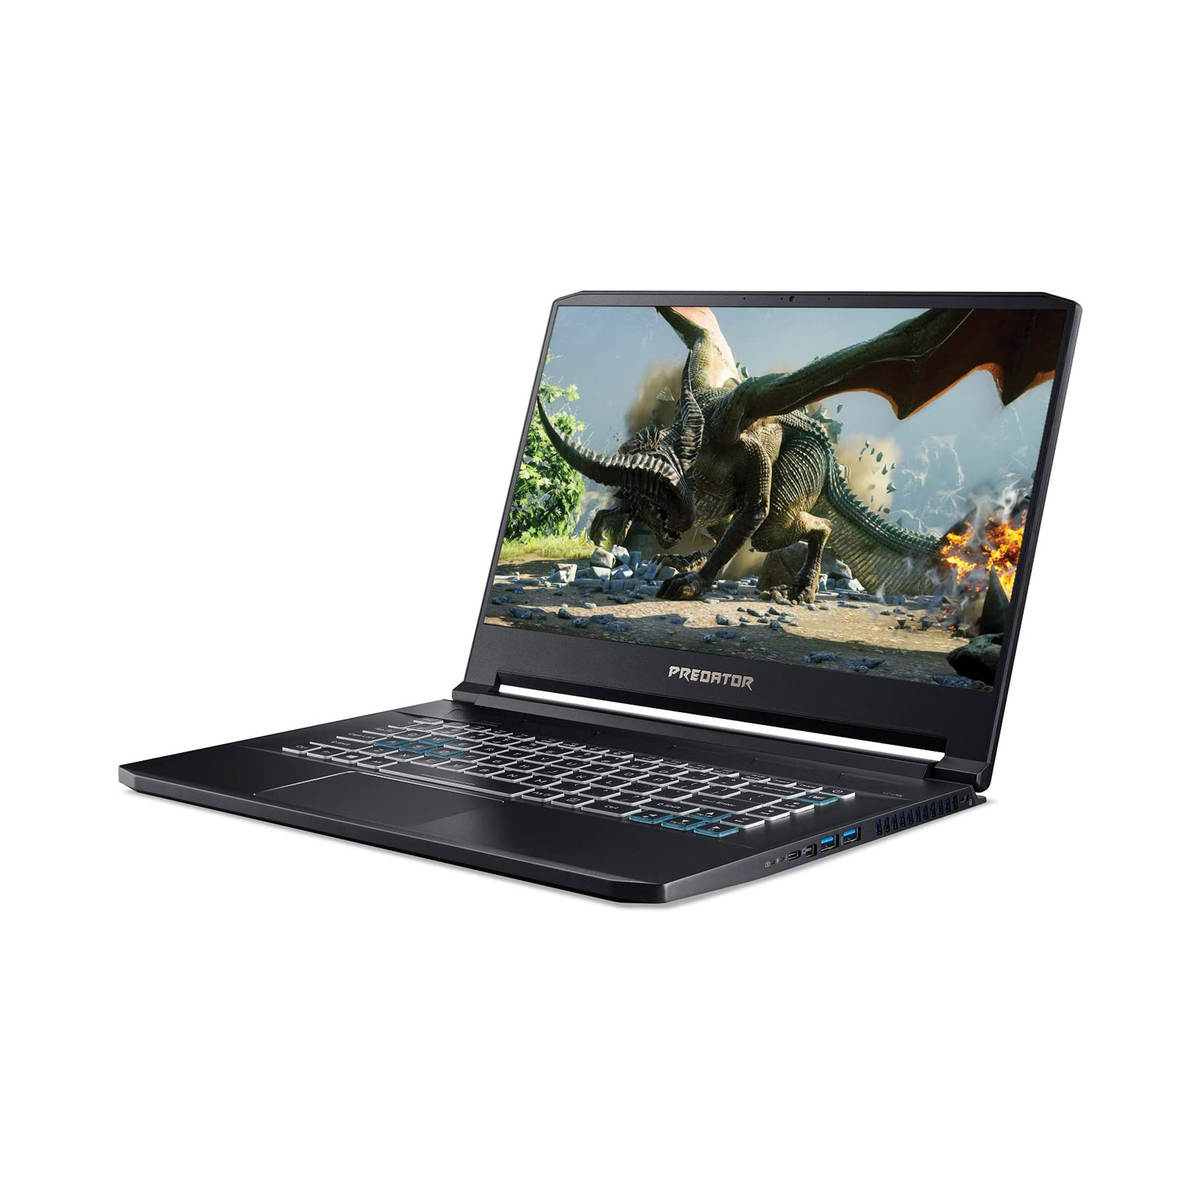 Acer Predator Triton 500 Gaming Laptop PT515-NHQ6WEM003,Intel Core i7,32GB RAM,1TB SSD,8GB RTX 2080 VGA,15.6"FHD IPS,Windows 10,Black